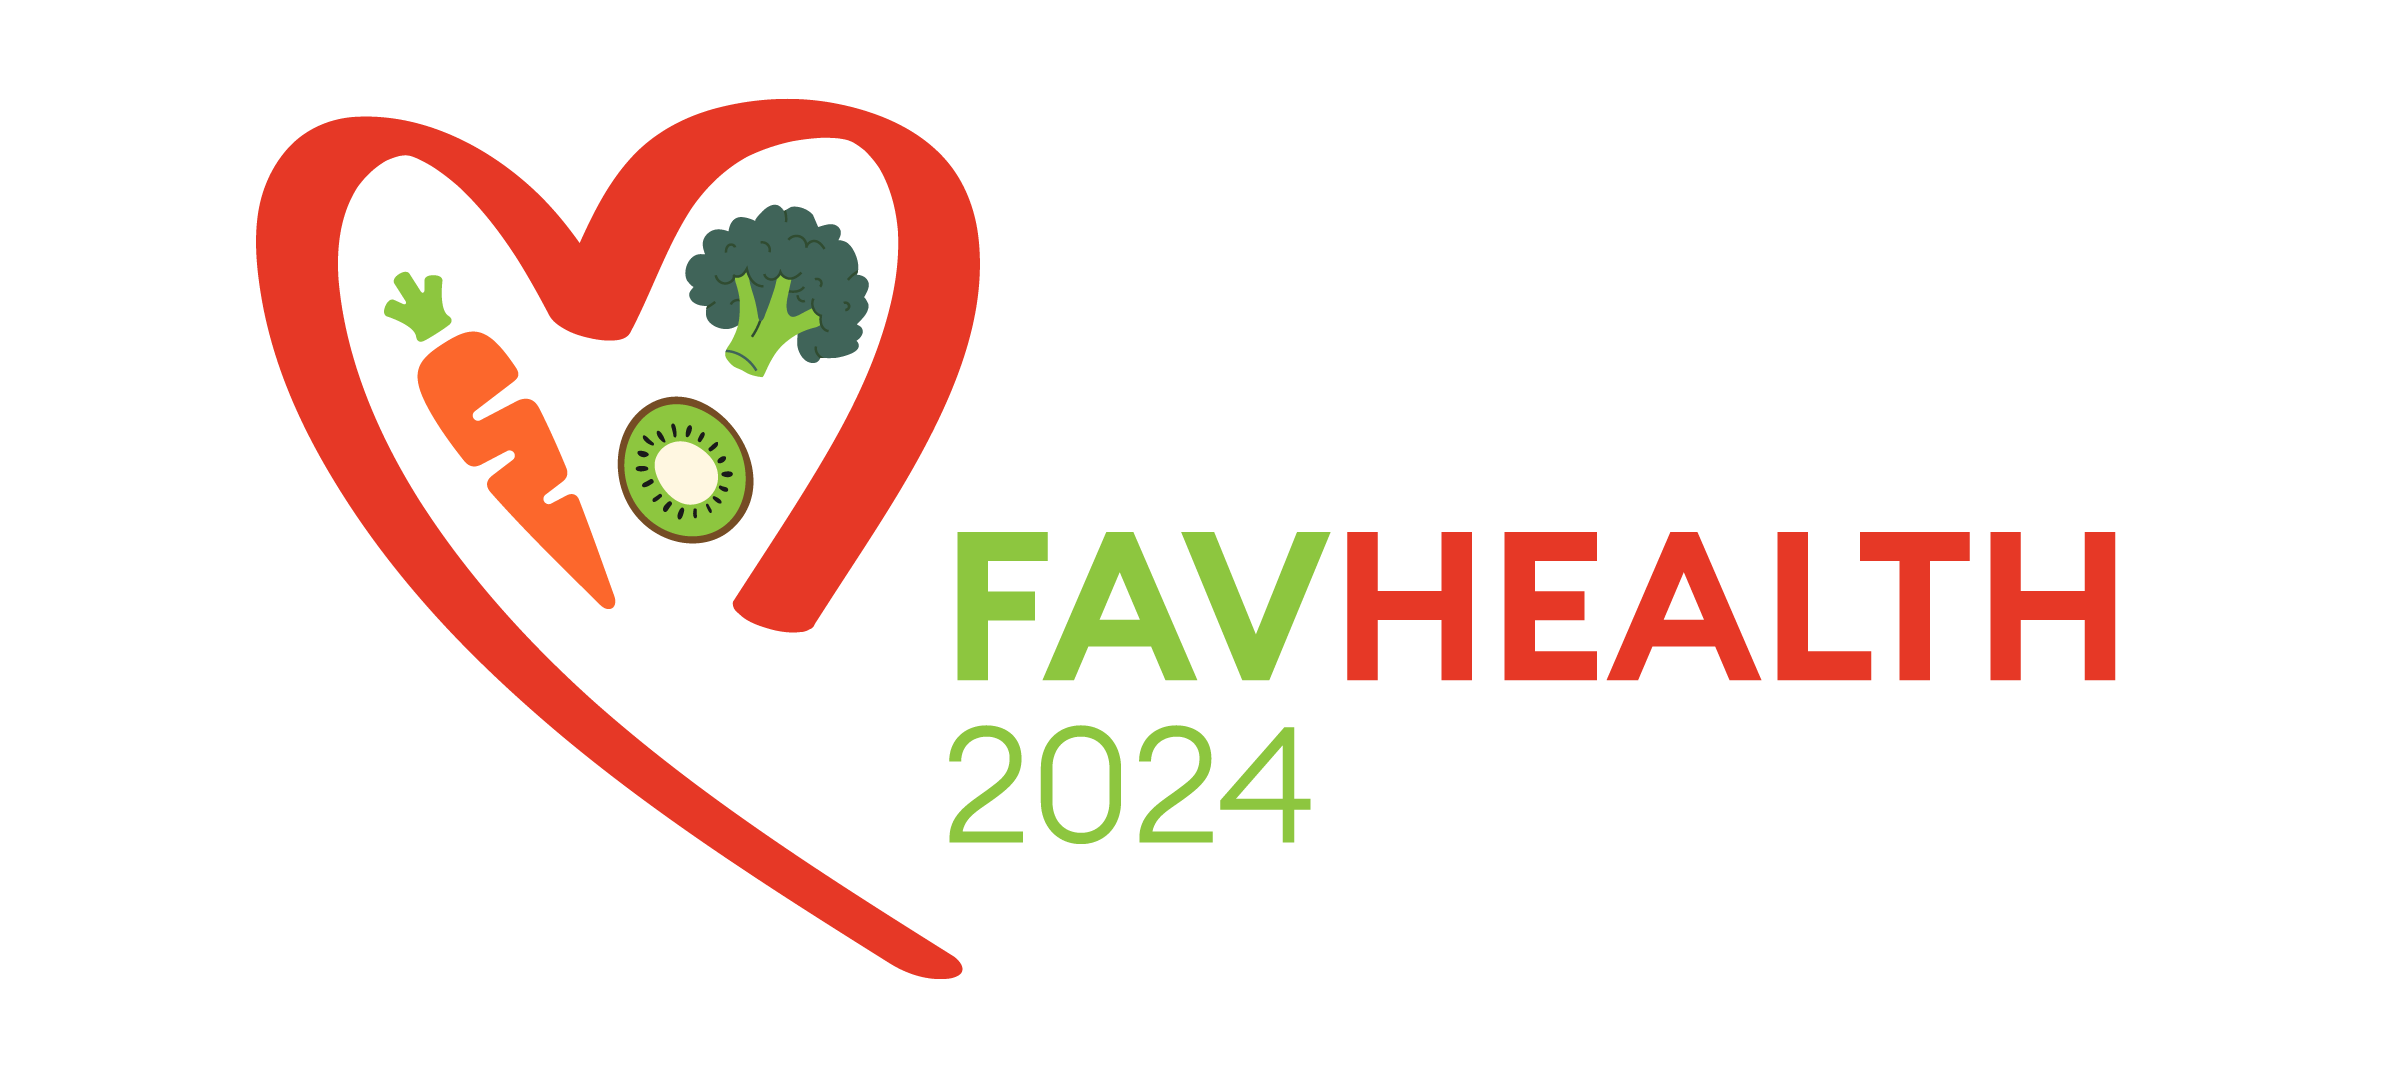 FAVHEALTH logo